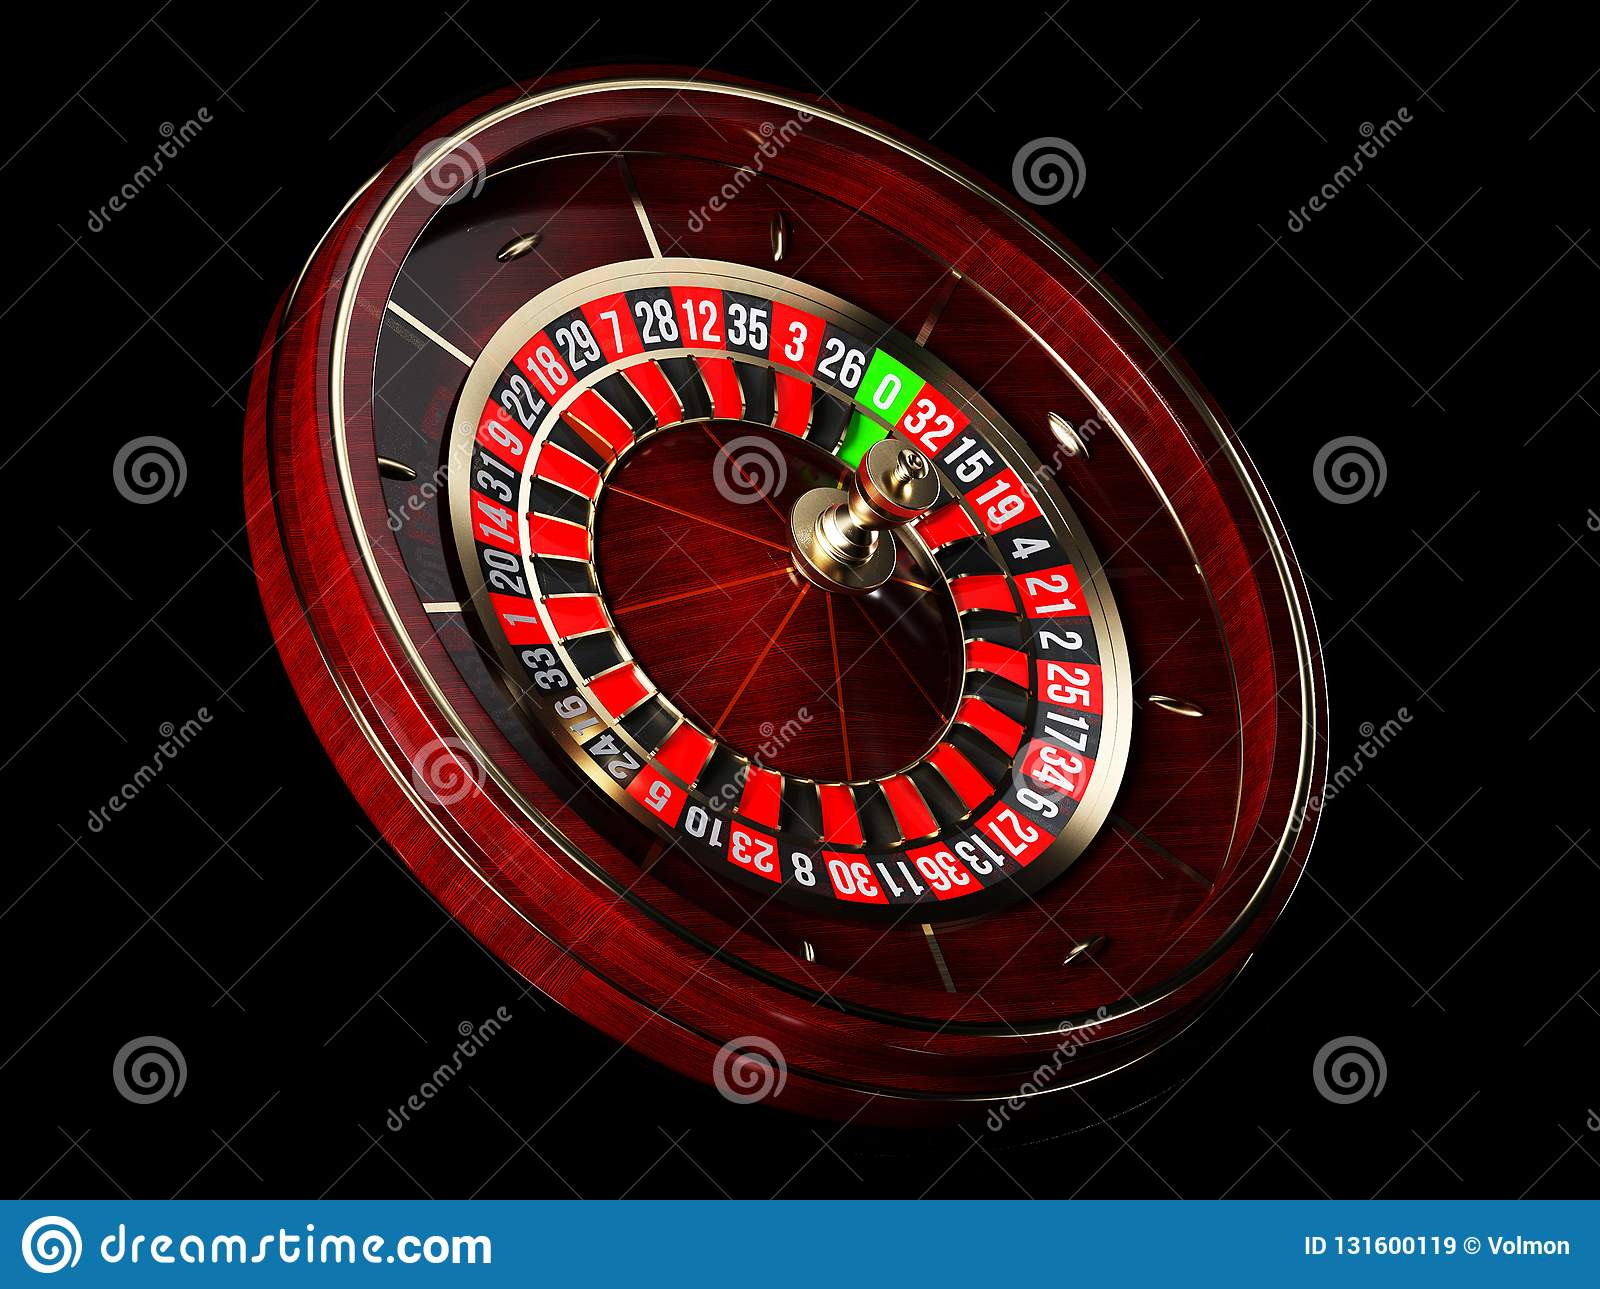 Online casino indiana